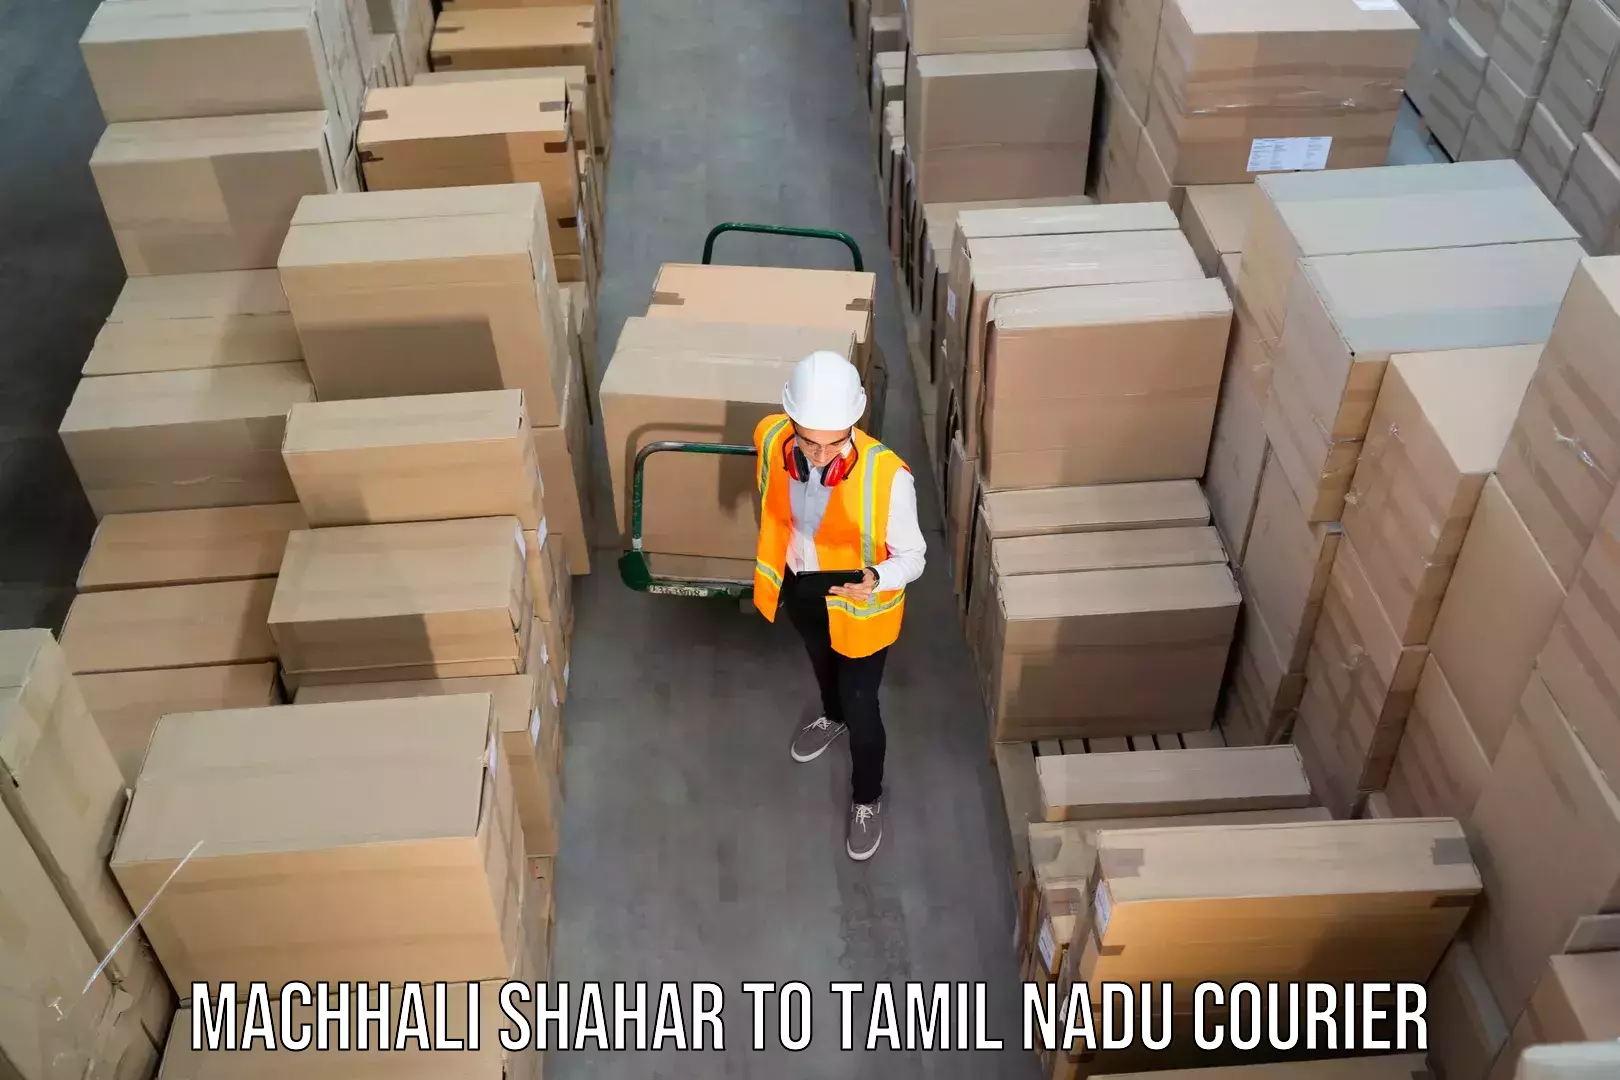 Next-day freight services Machhali Shahar to Ennore Port Chennai